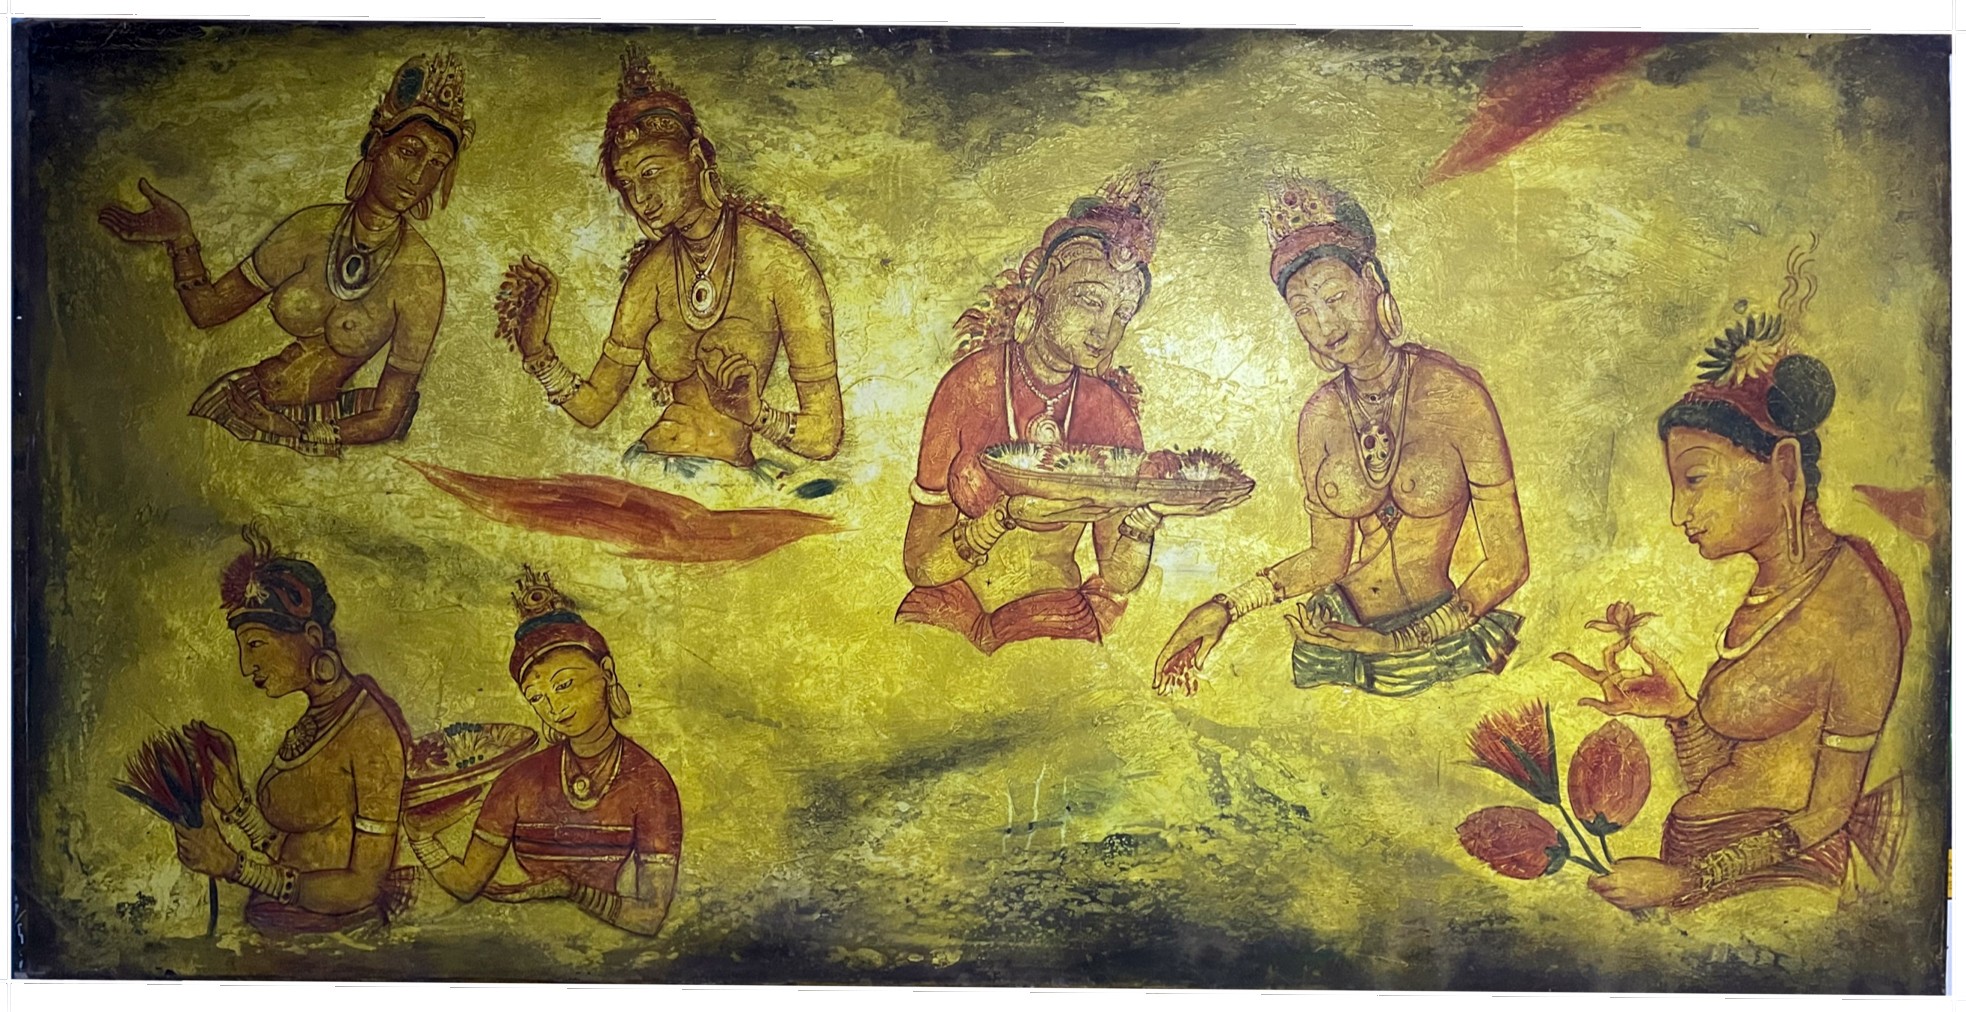 sigiriya frescoes by kasun milinda